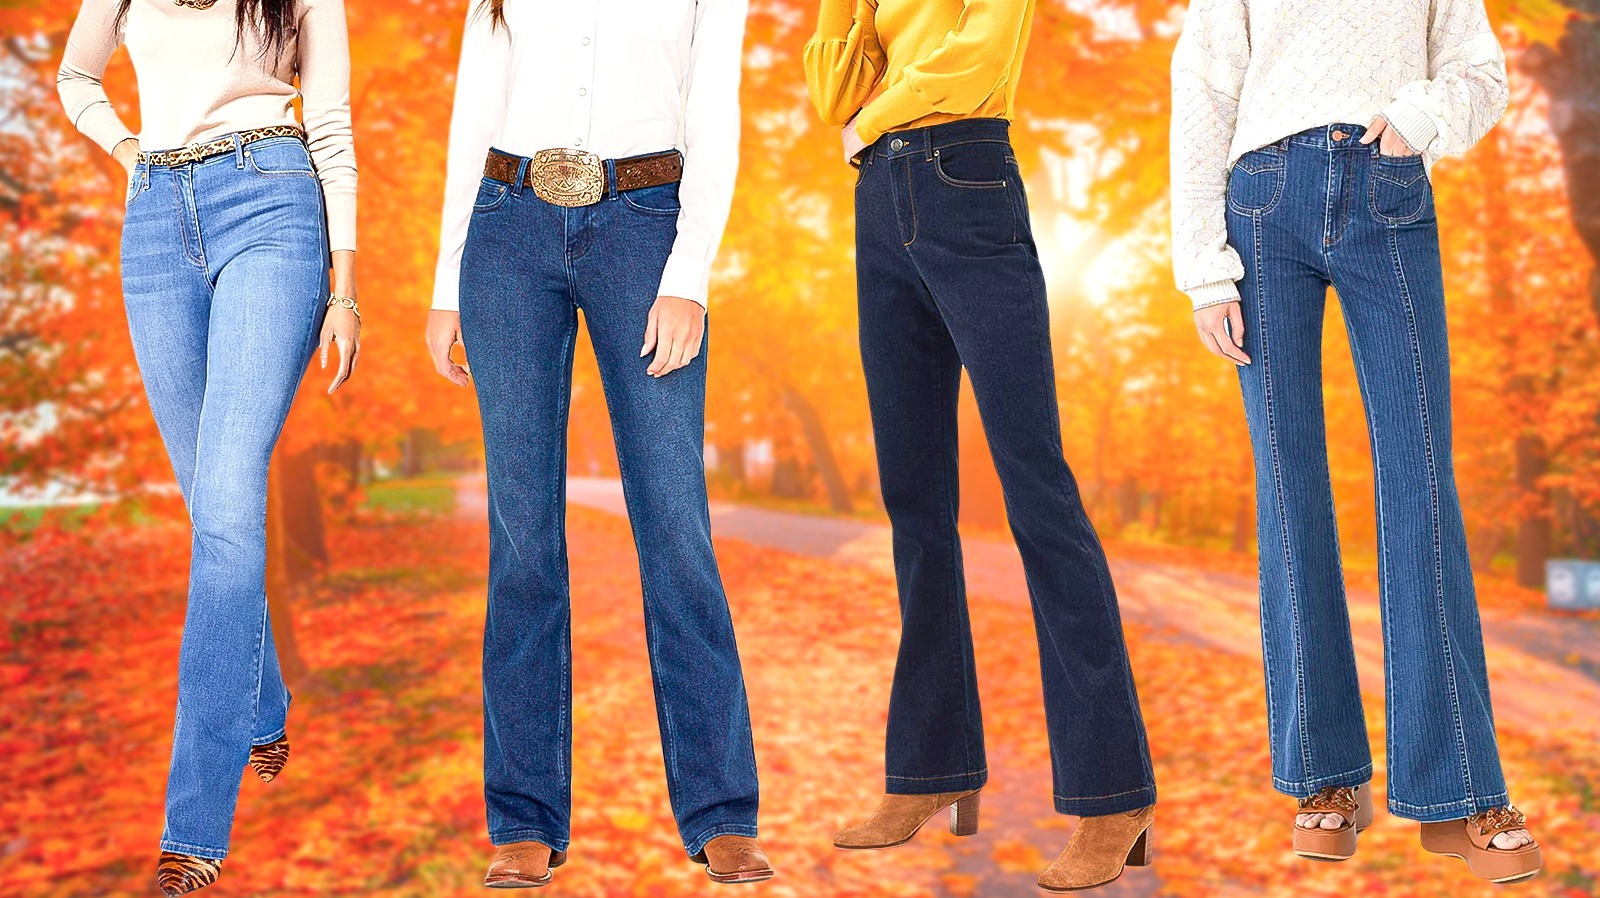 Low waist boot-cut jeans - New - Women